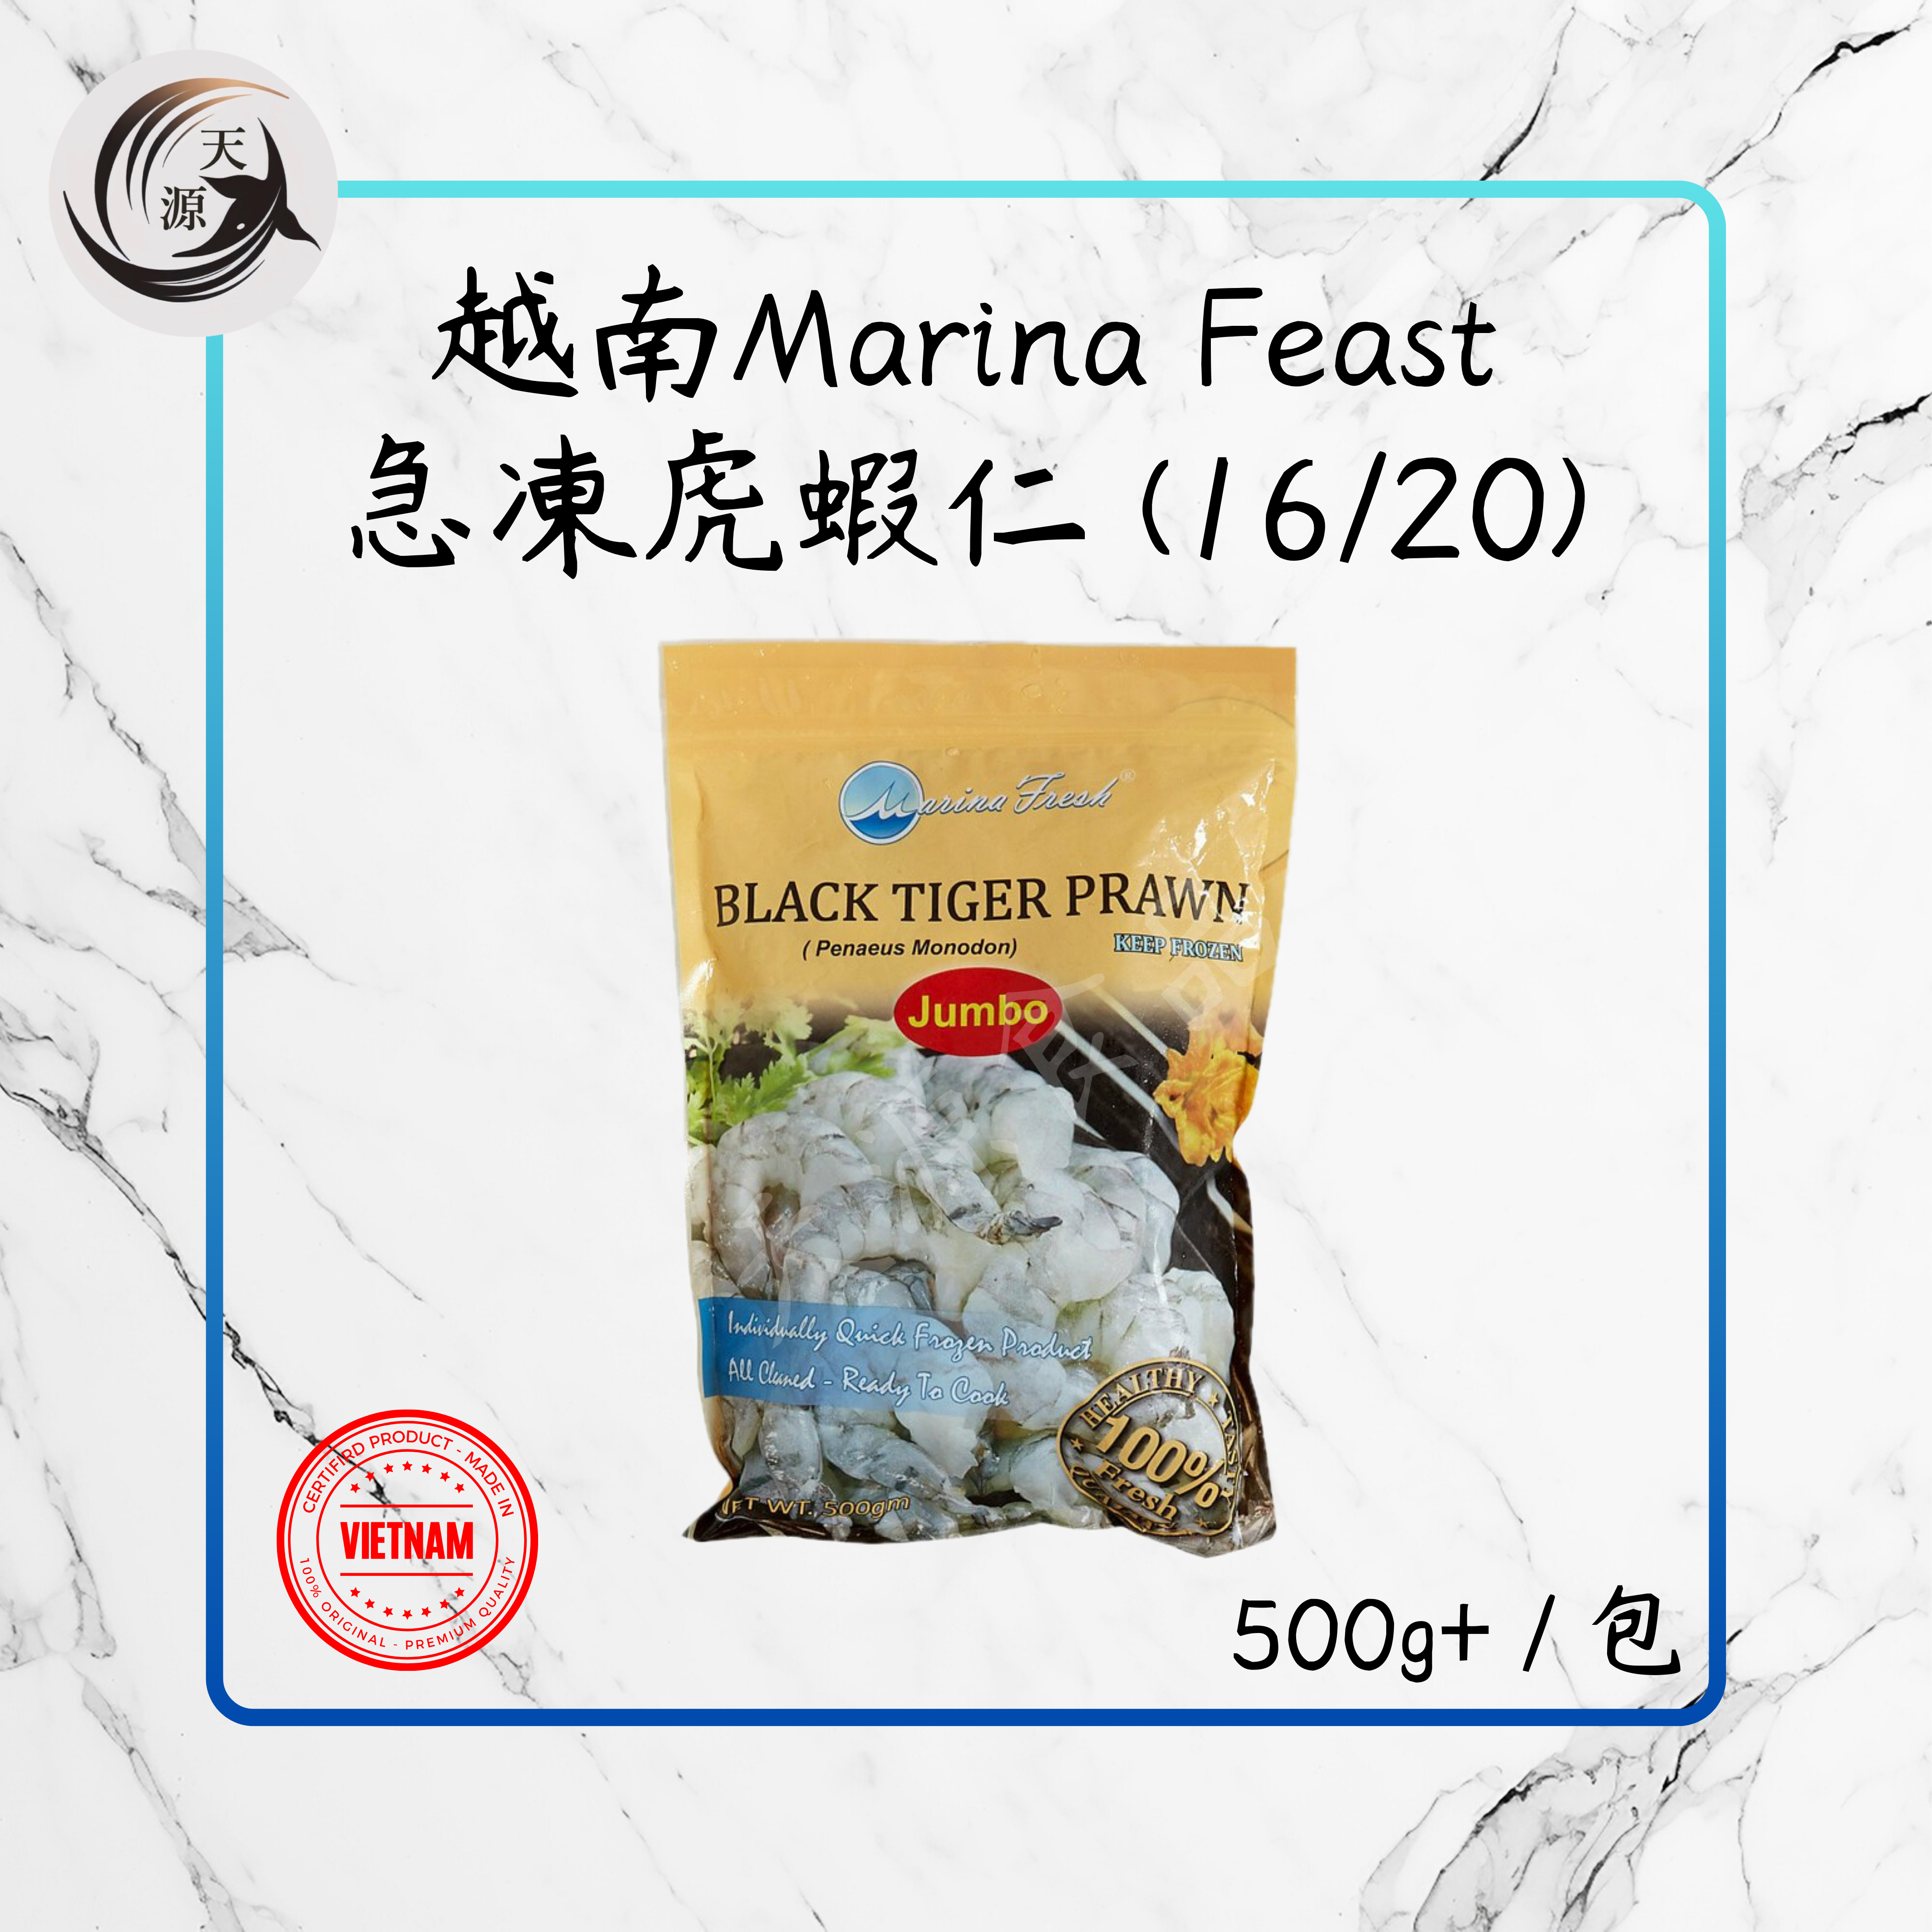 Vietnam Marina Feast frozen tiger shrimp (16/20) 500g